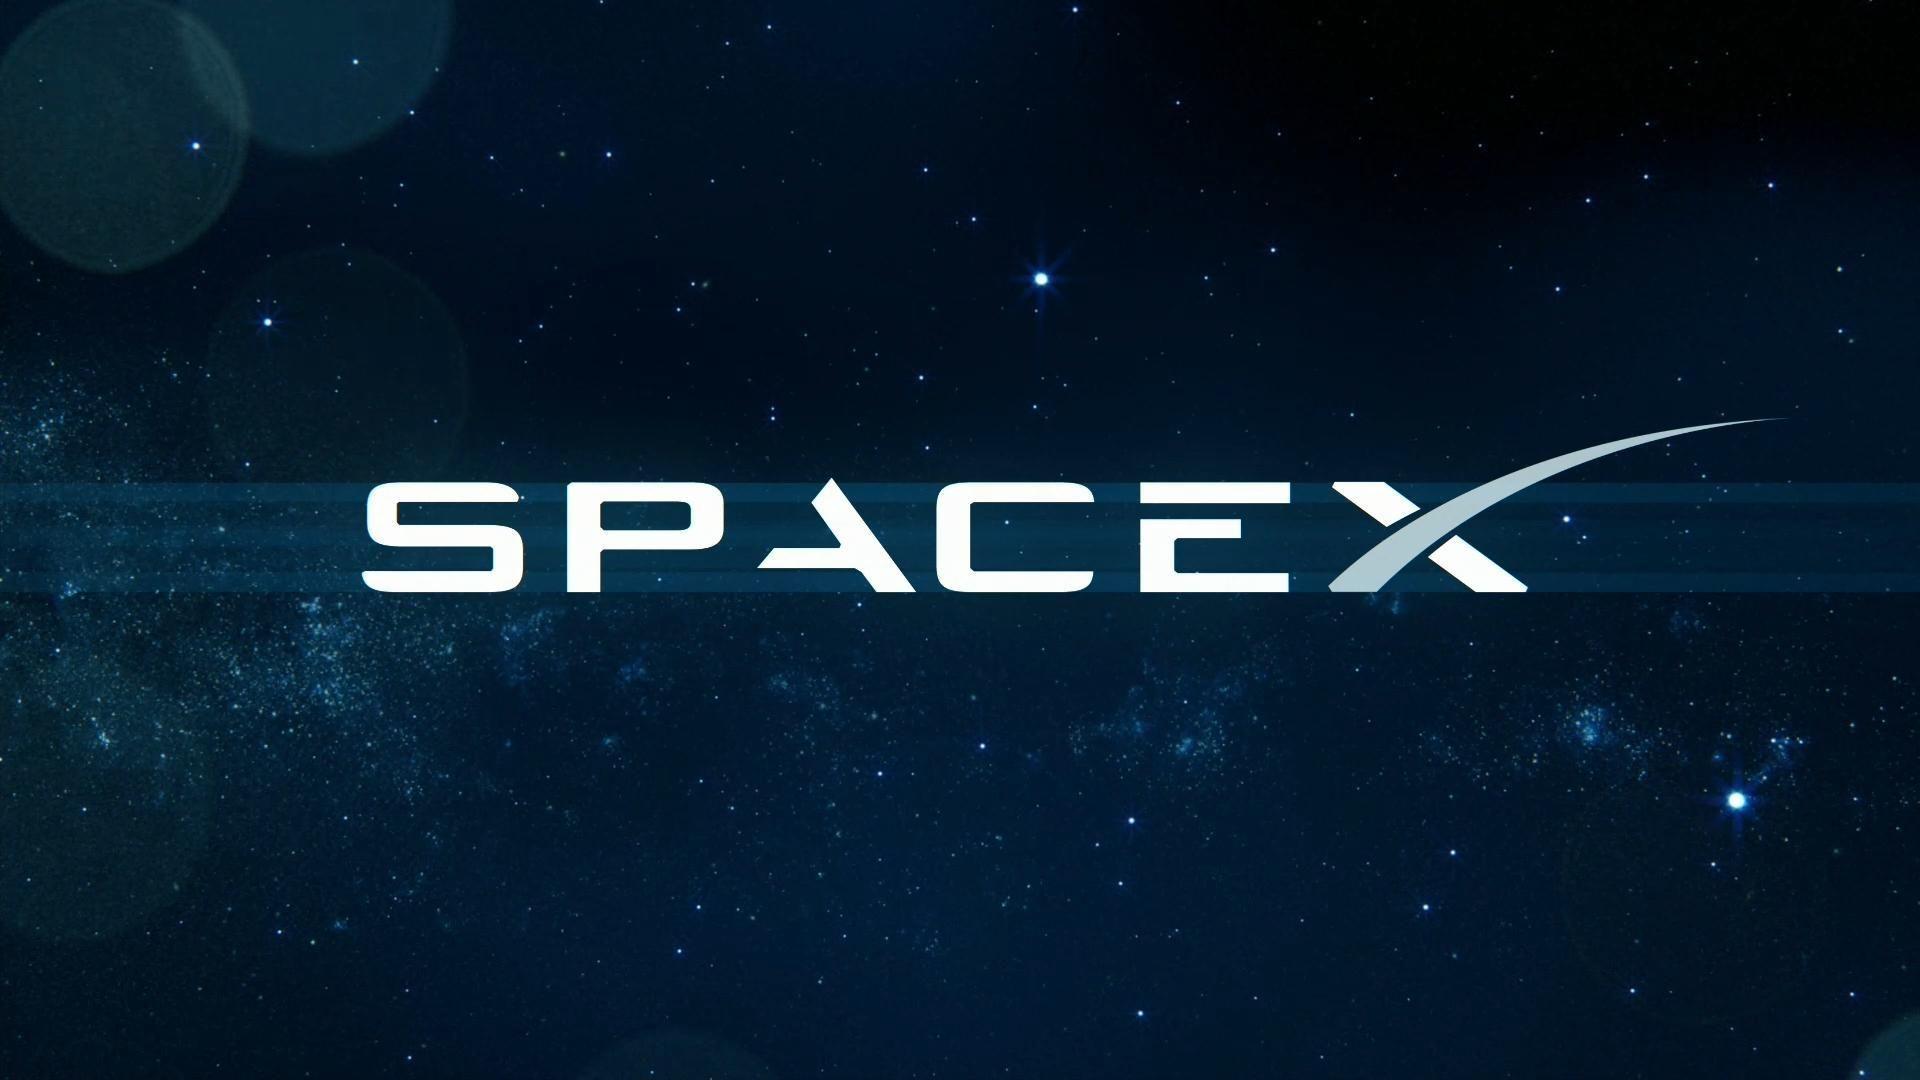 SpaceX X Logo - Elon Musk Space X logo | design in 2019 | Elon musk, Space, Mars